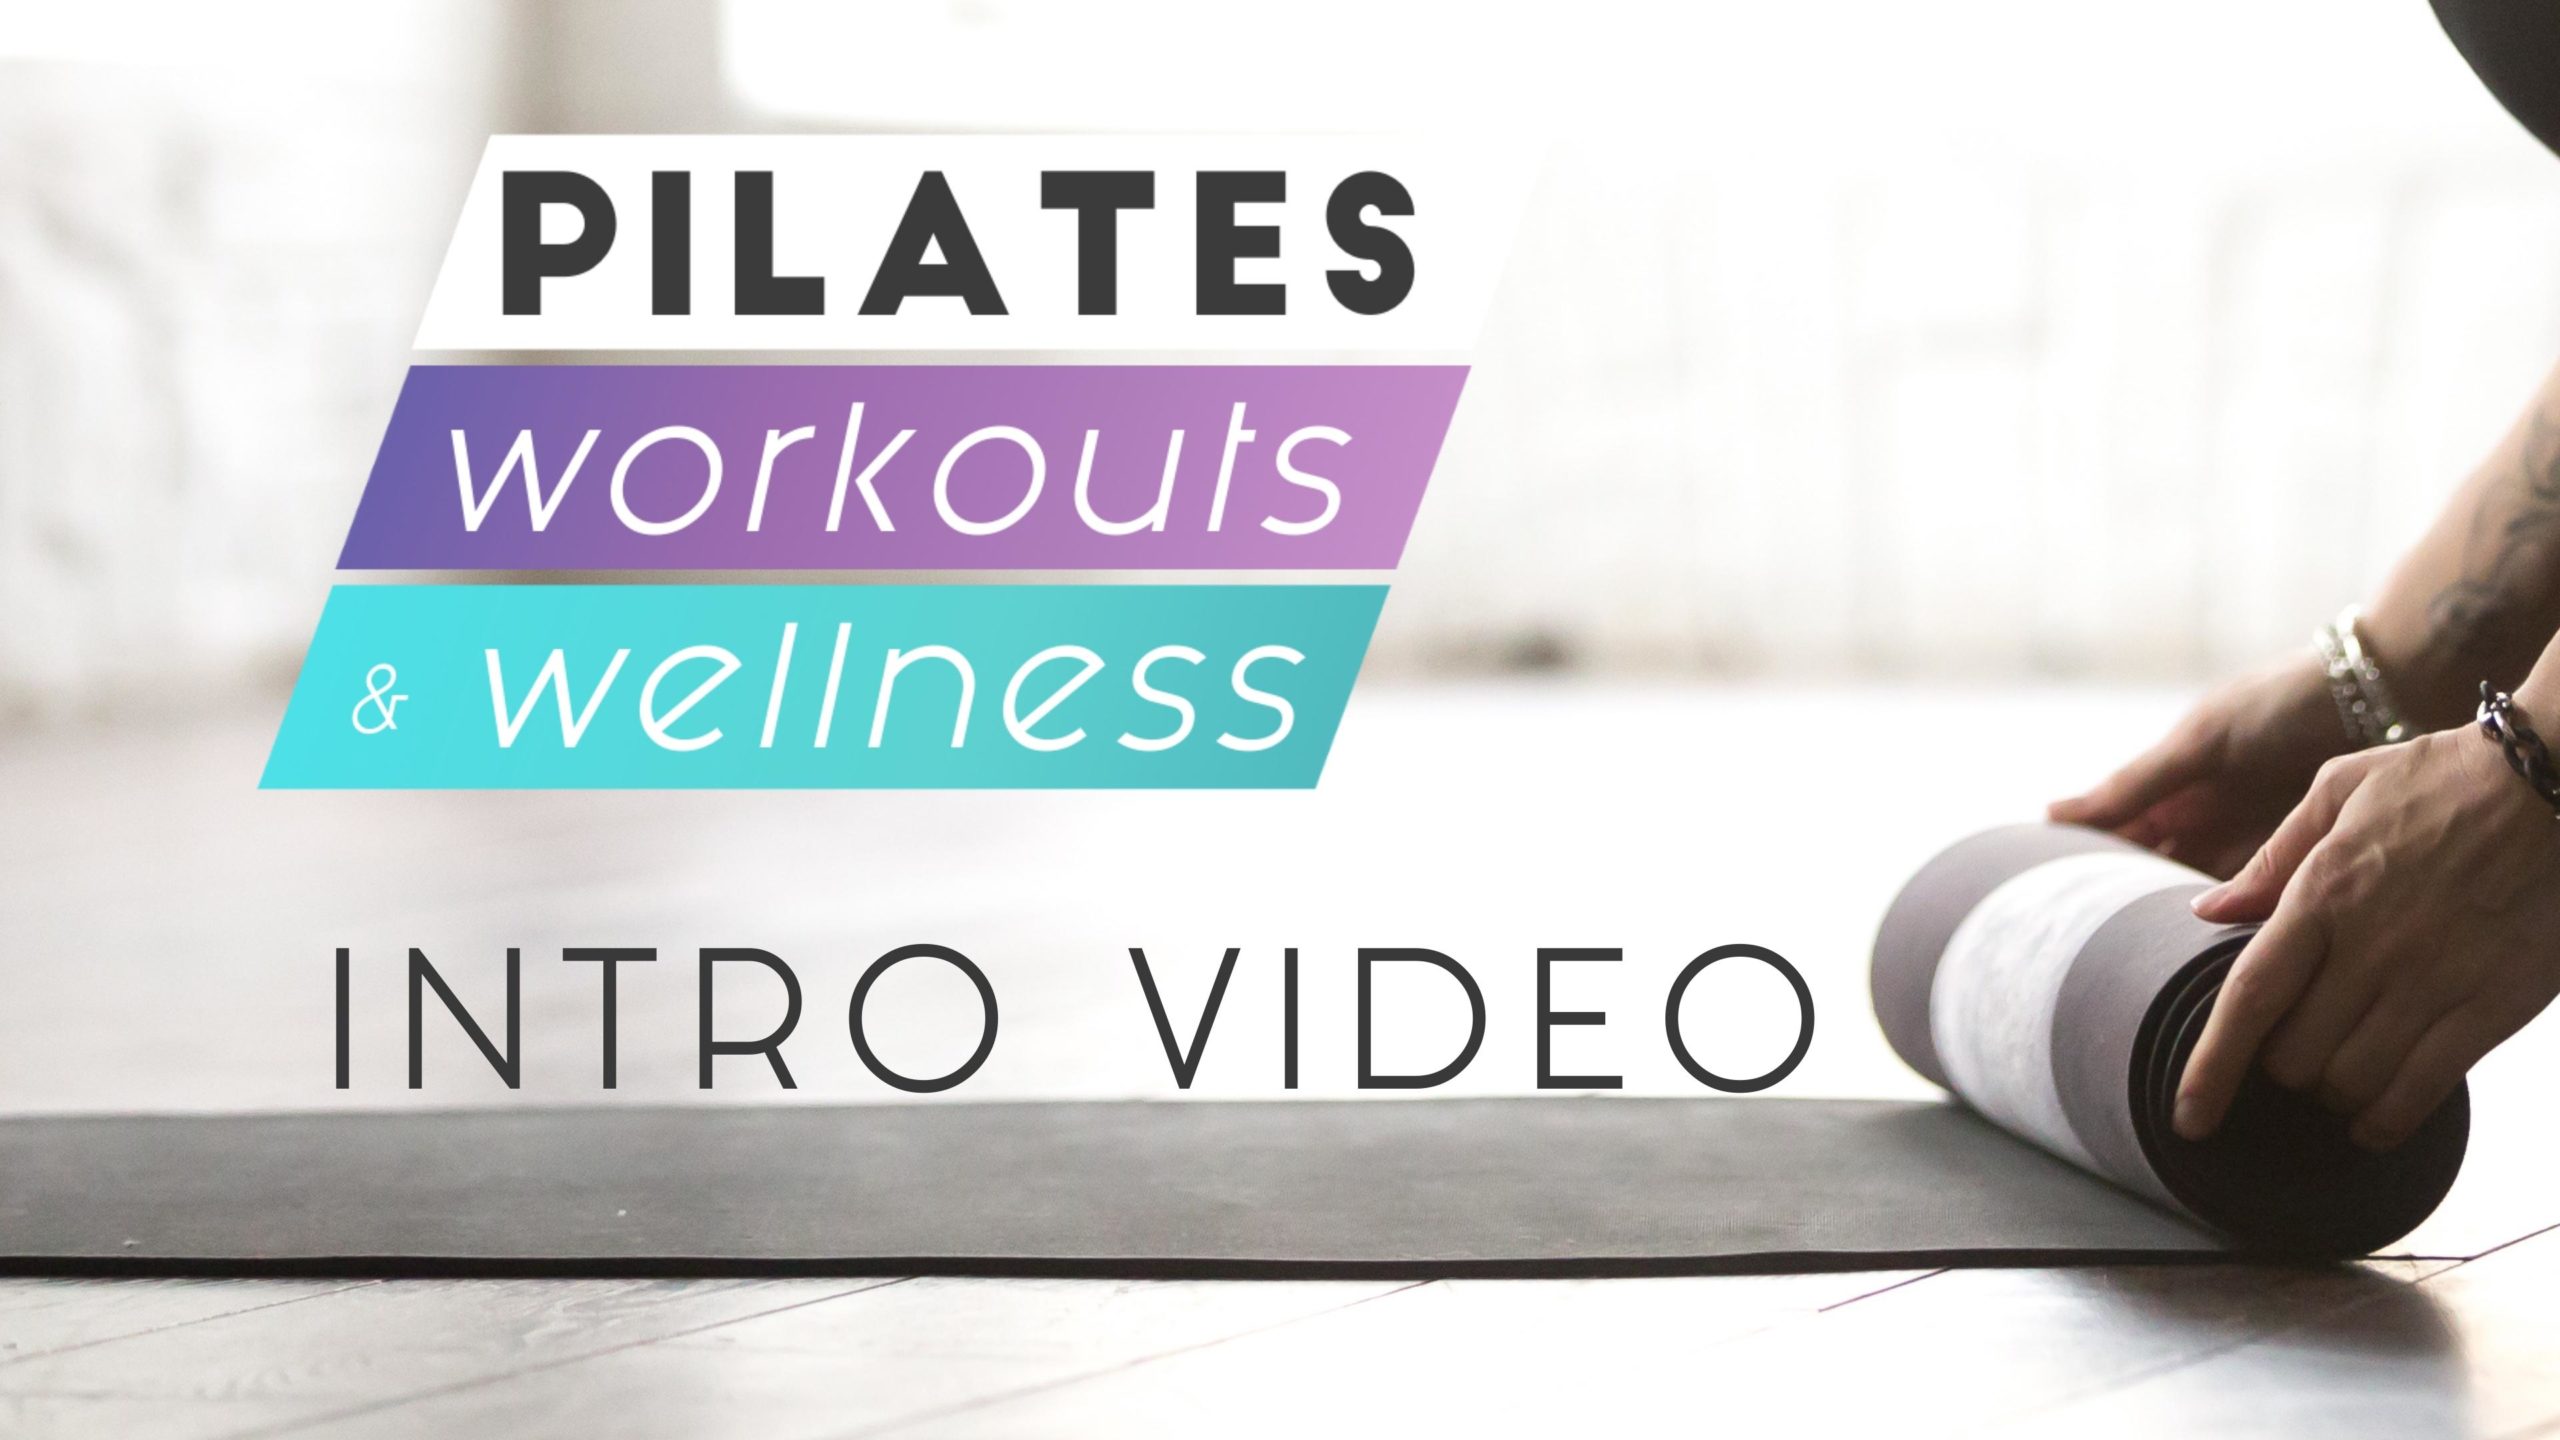 Pilates Workouts & Wellness Intro Video